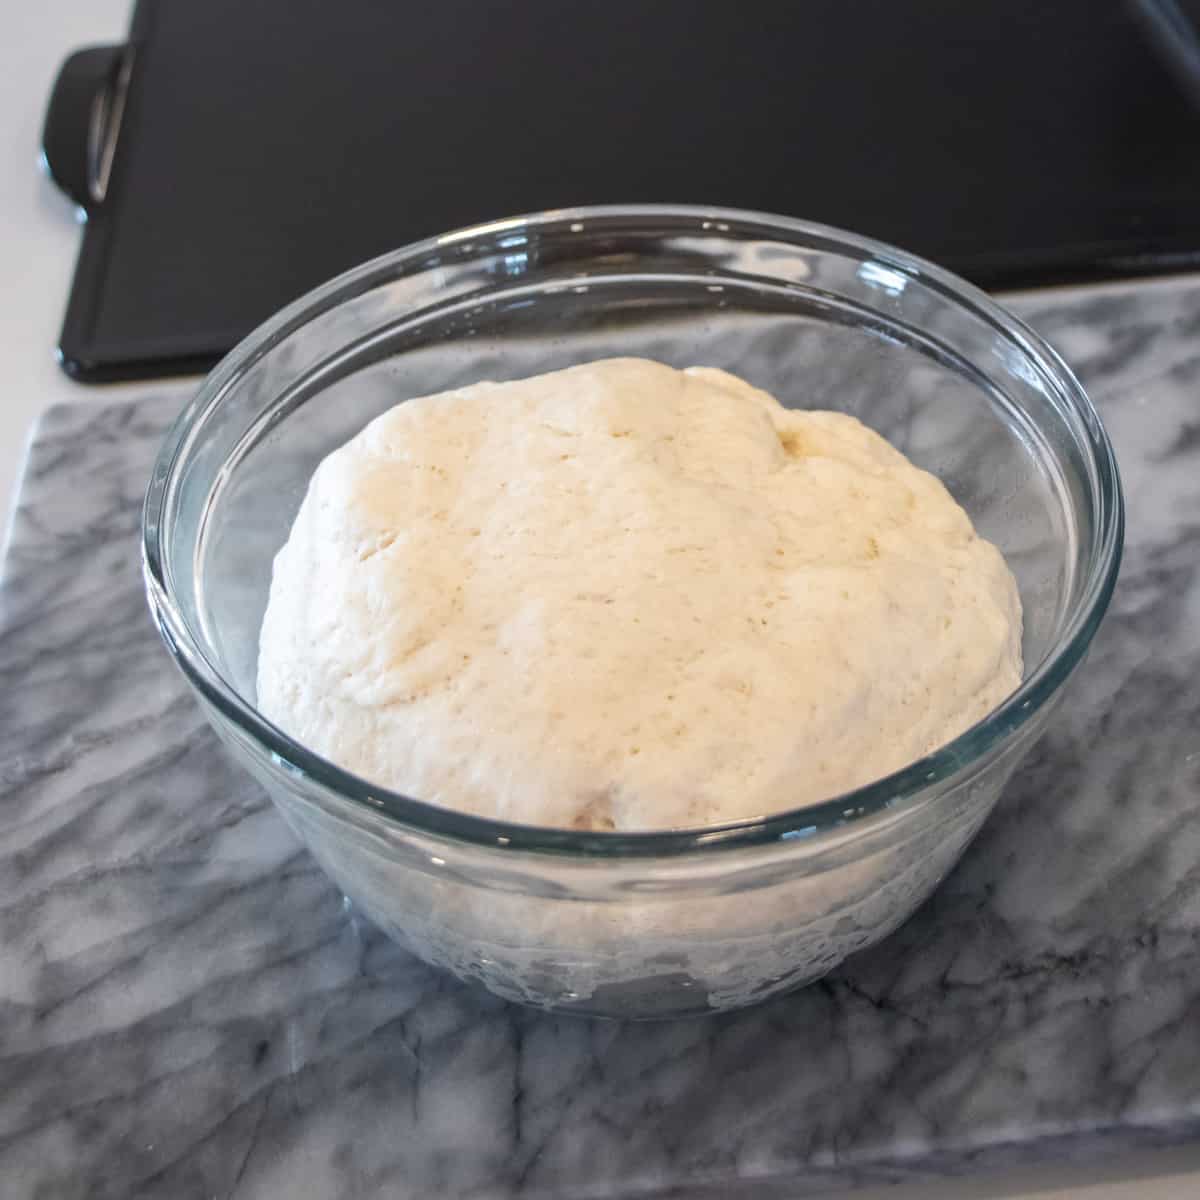 Fresh risen dough in a glass bowl.